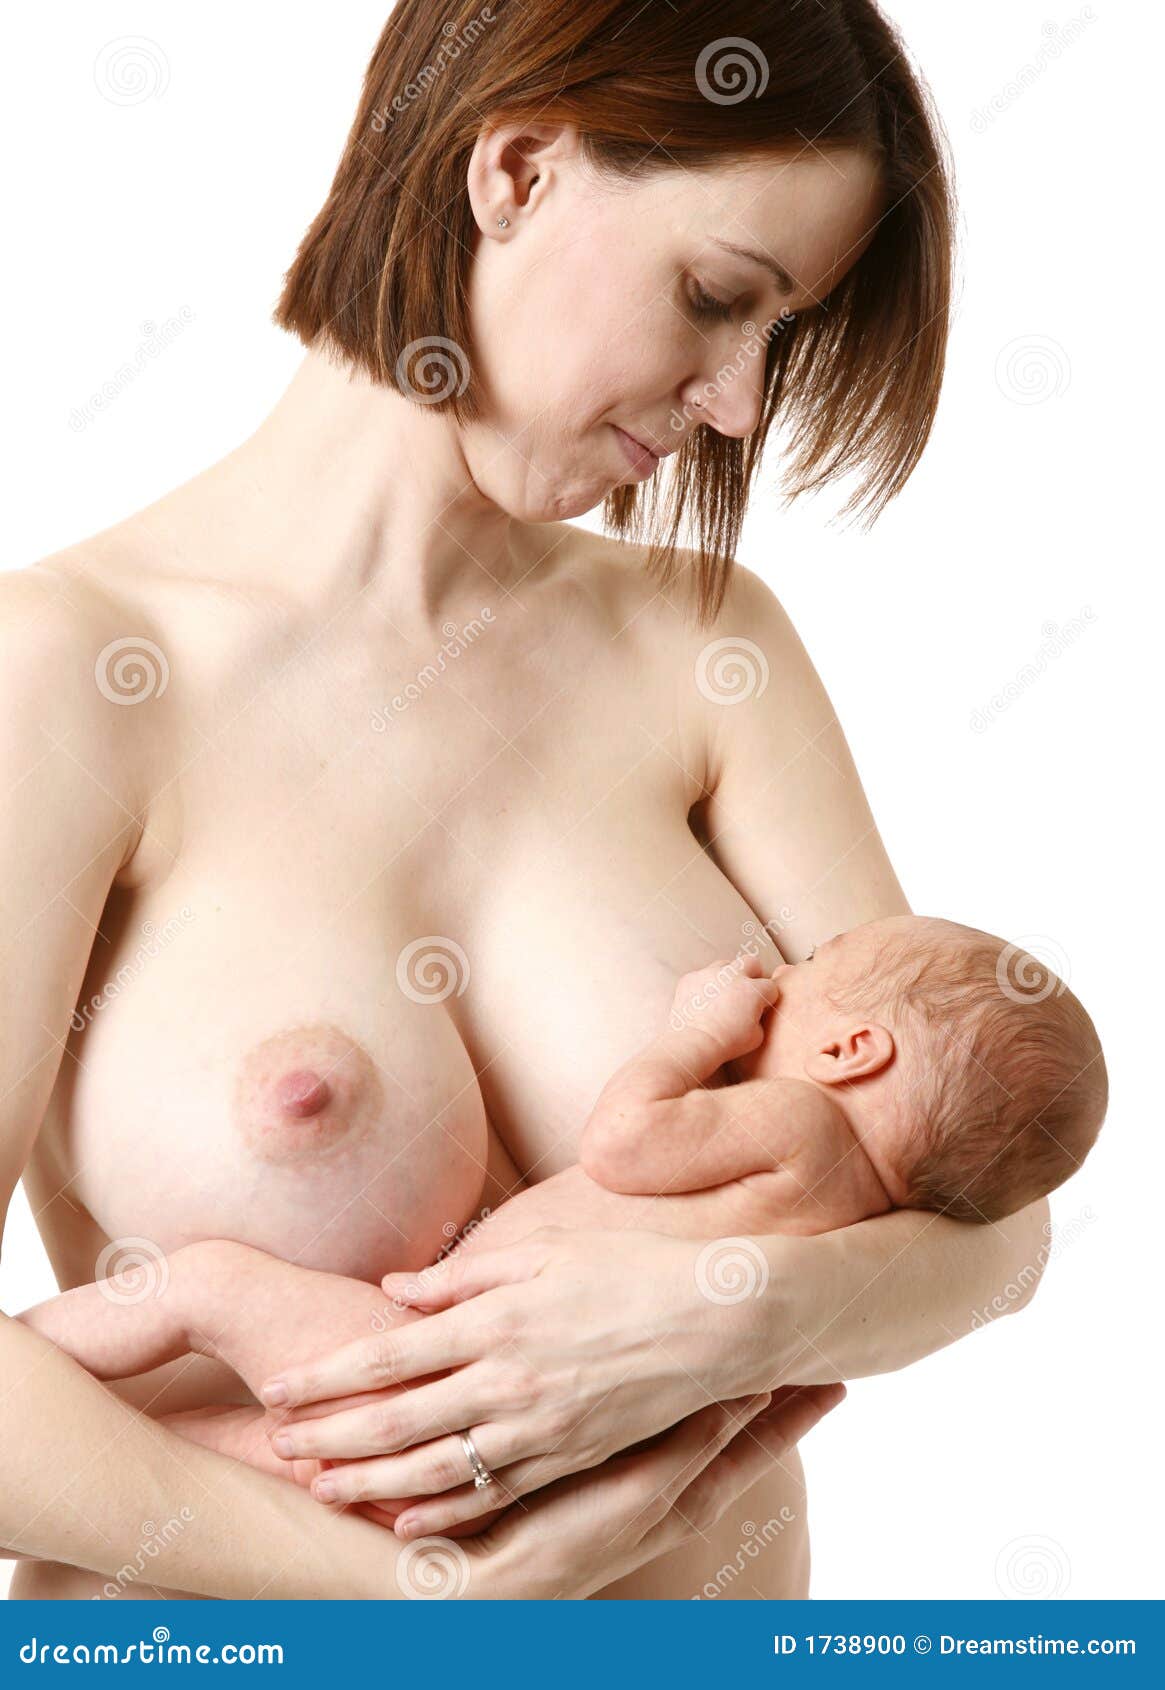 Girls breast feeding naked